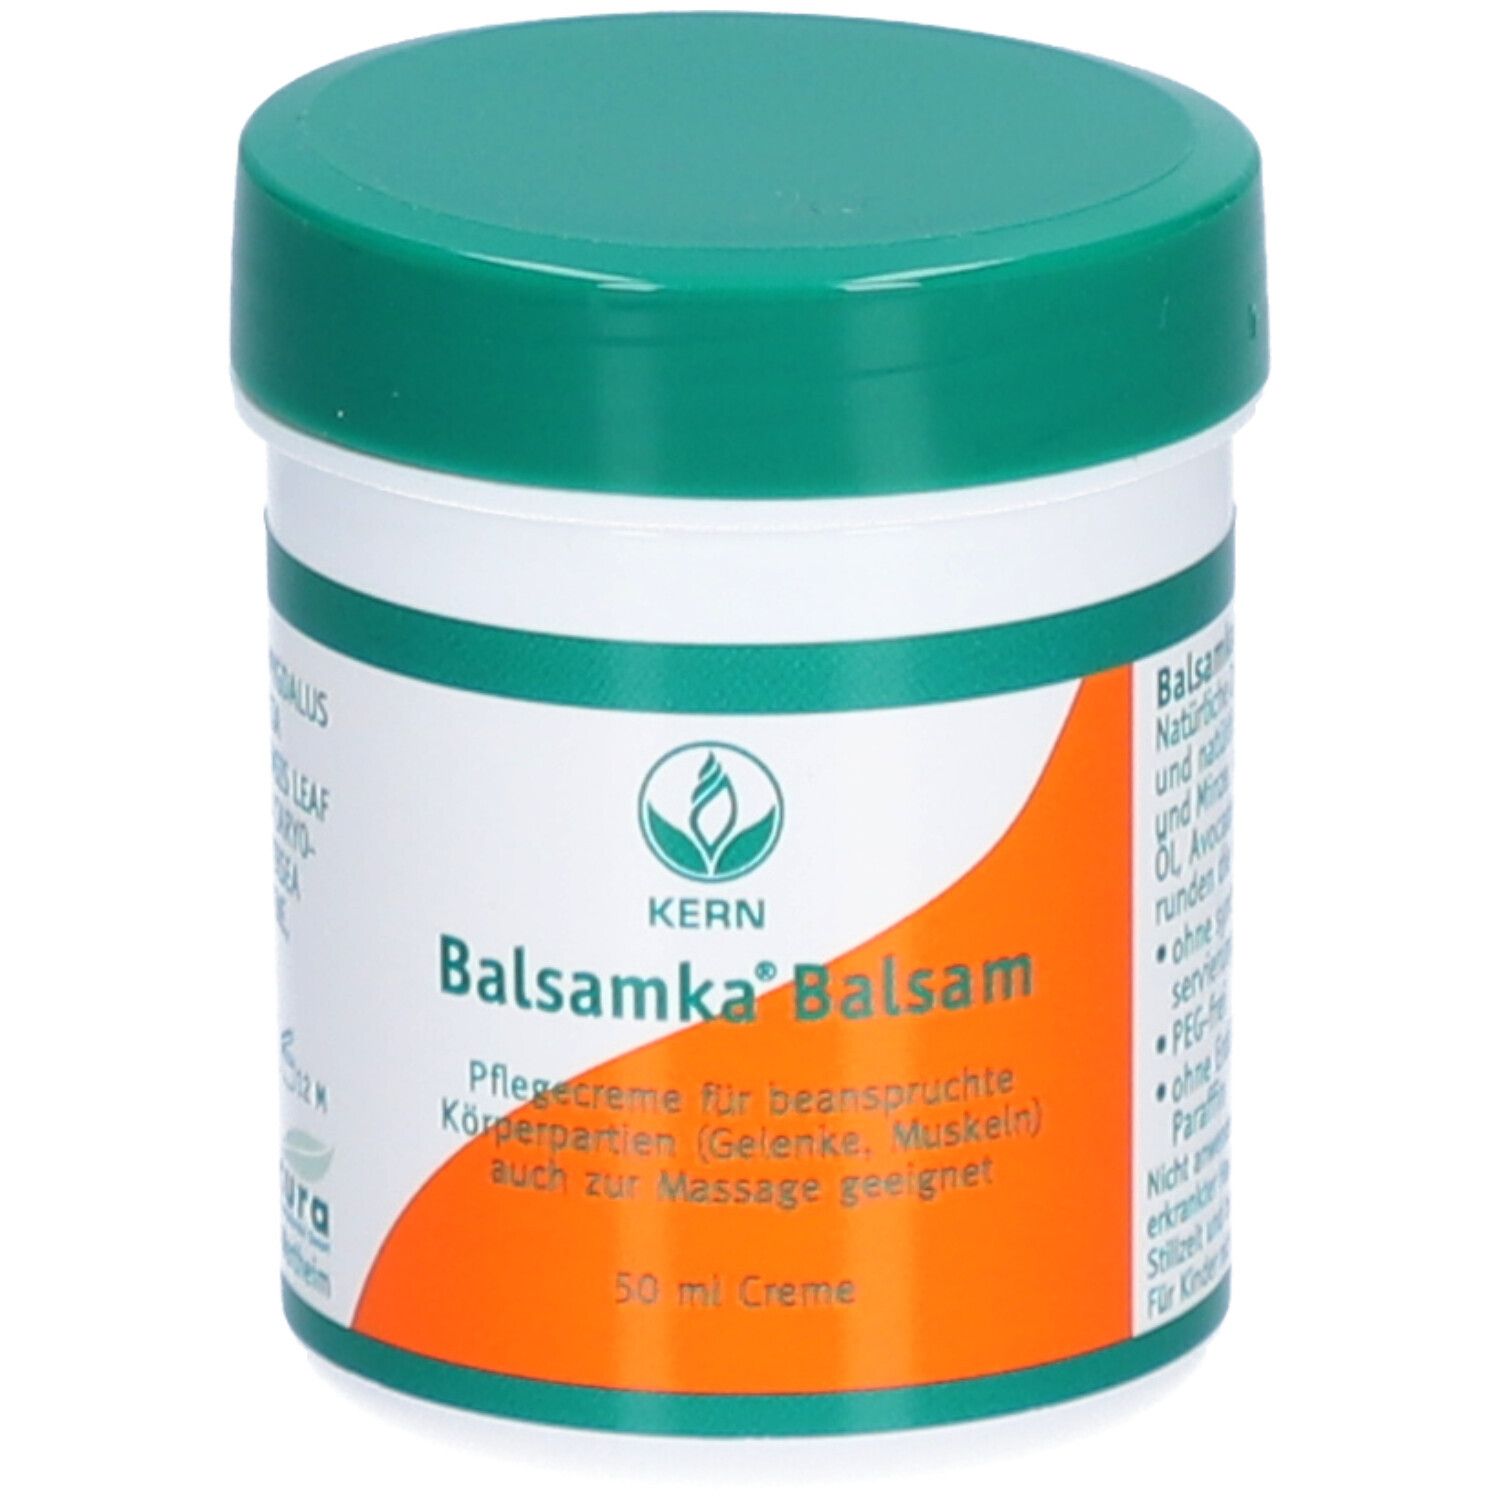 Balsamka® Balsam